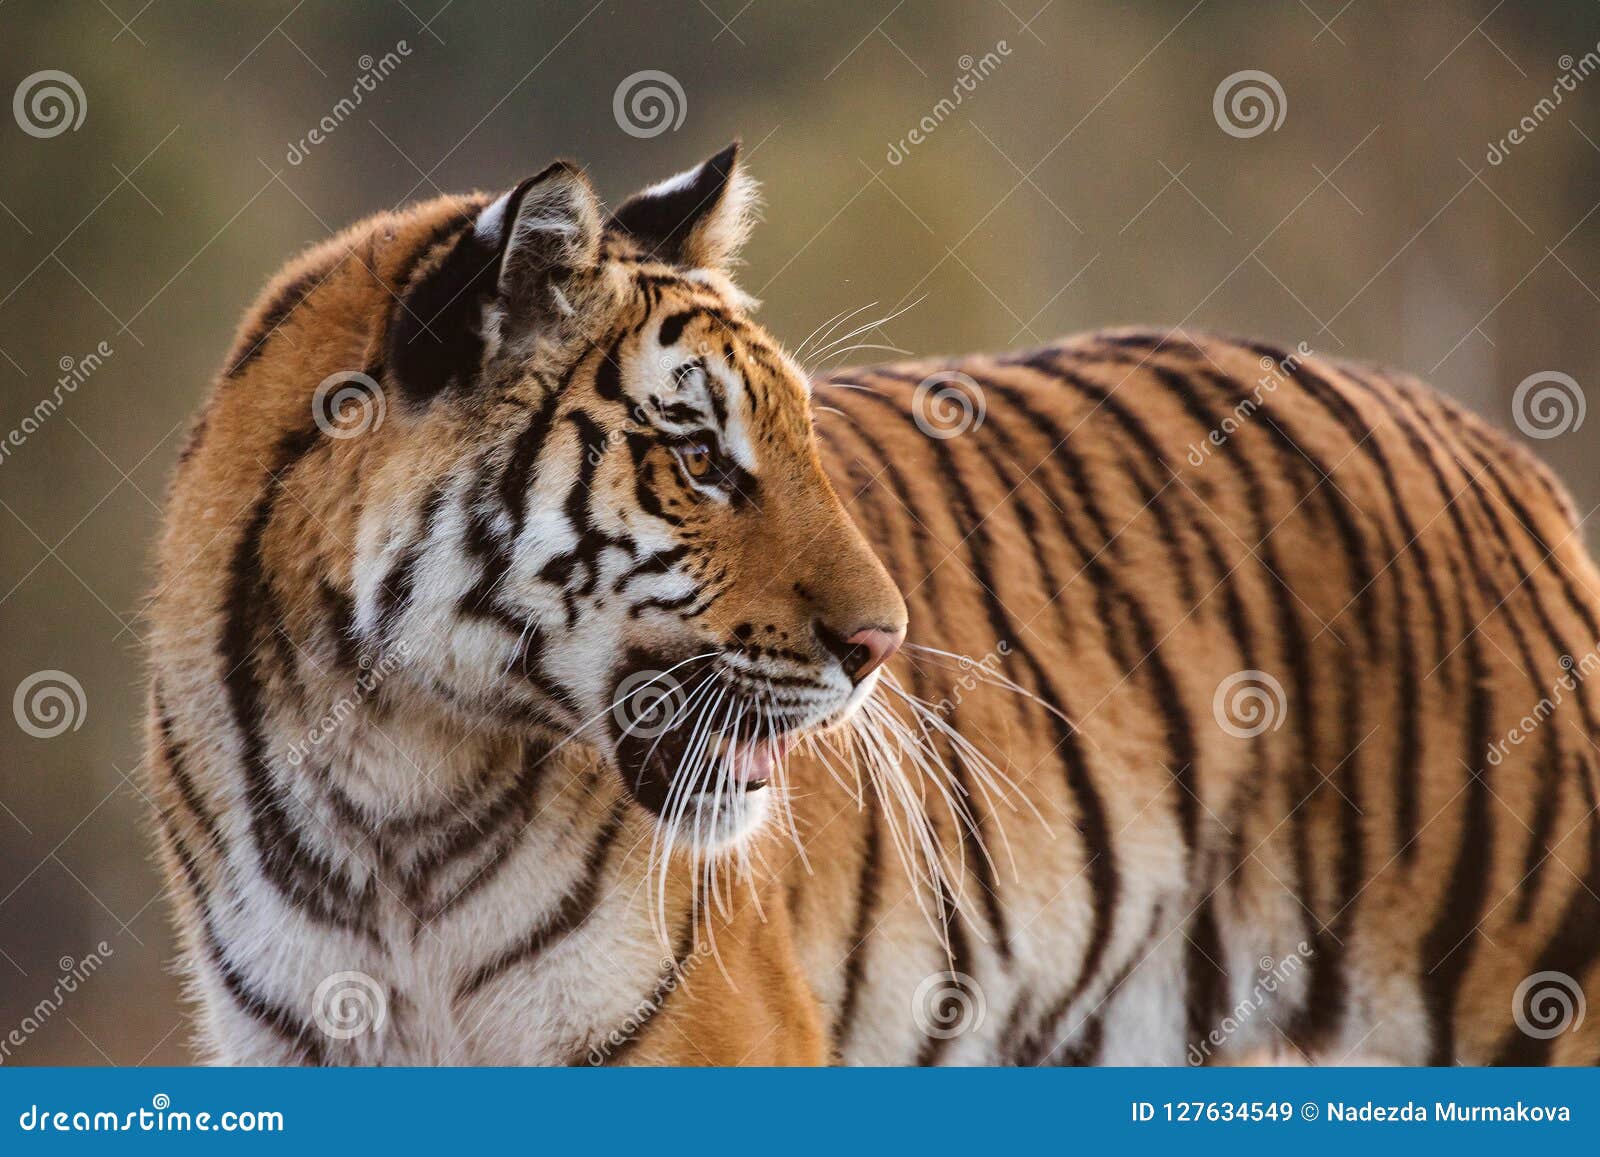 tiger portrait. hunt the prey in tajga in summer time. tiger in wild summer nature. action wildlife scene, danger animal.